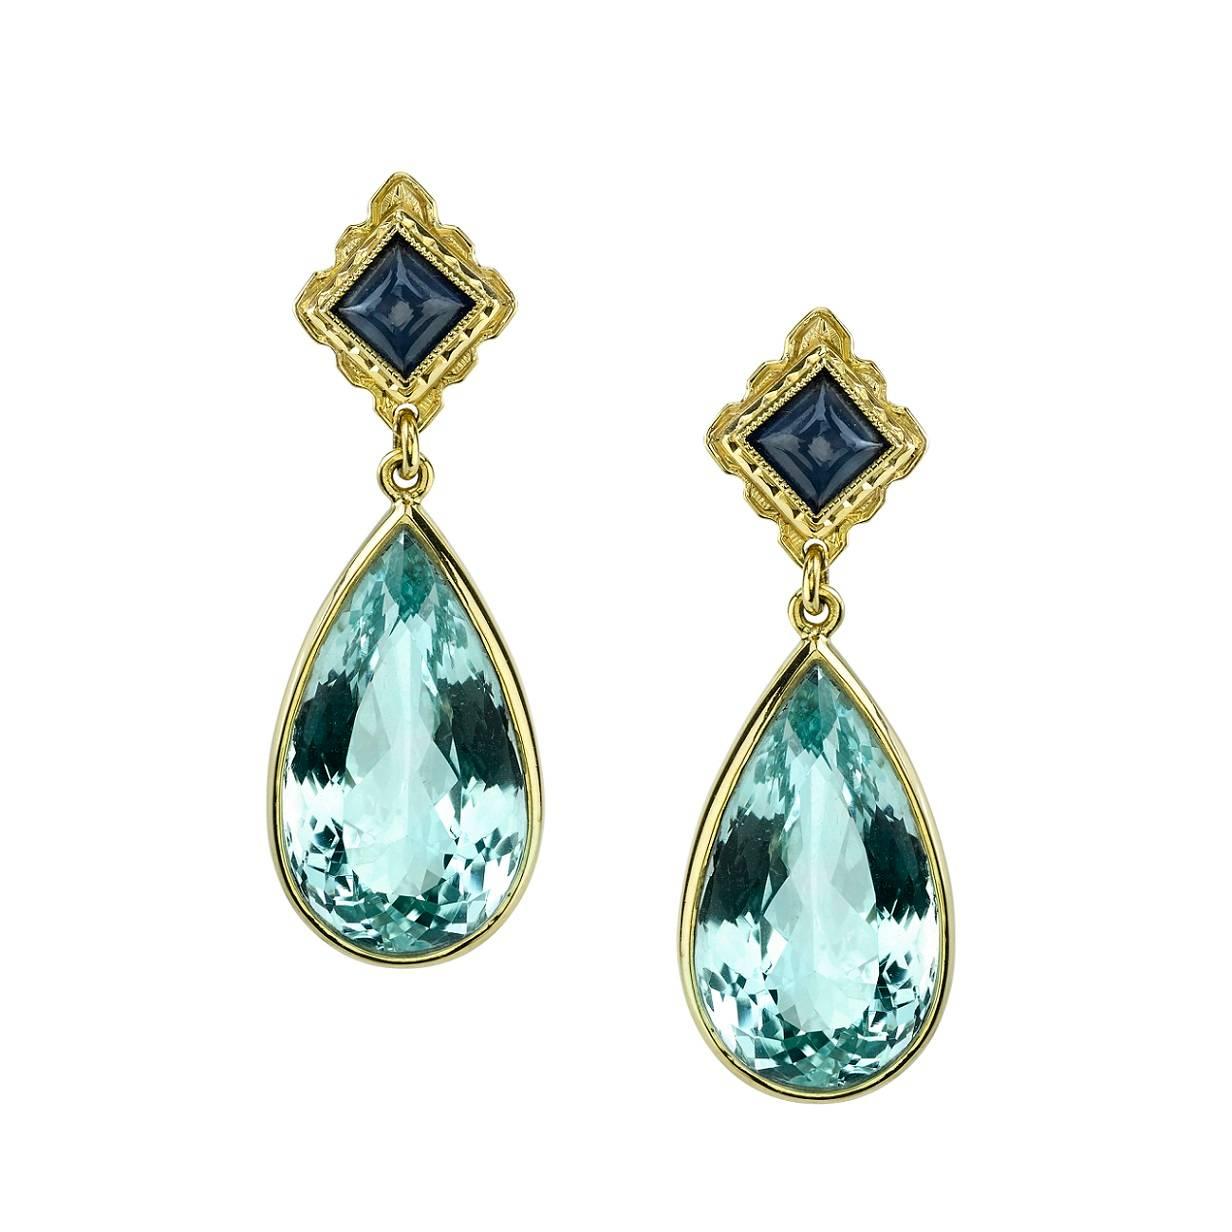 Aquamarine and Sapphire Earrings